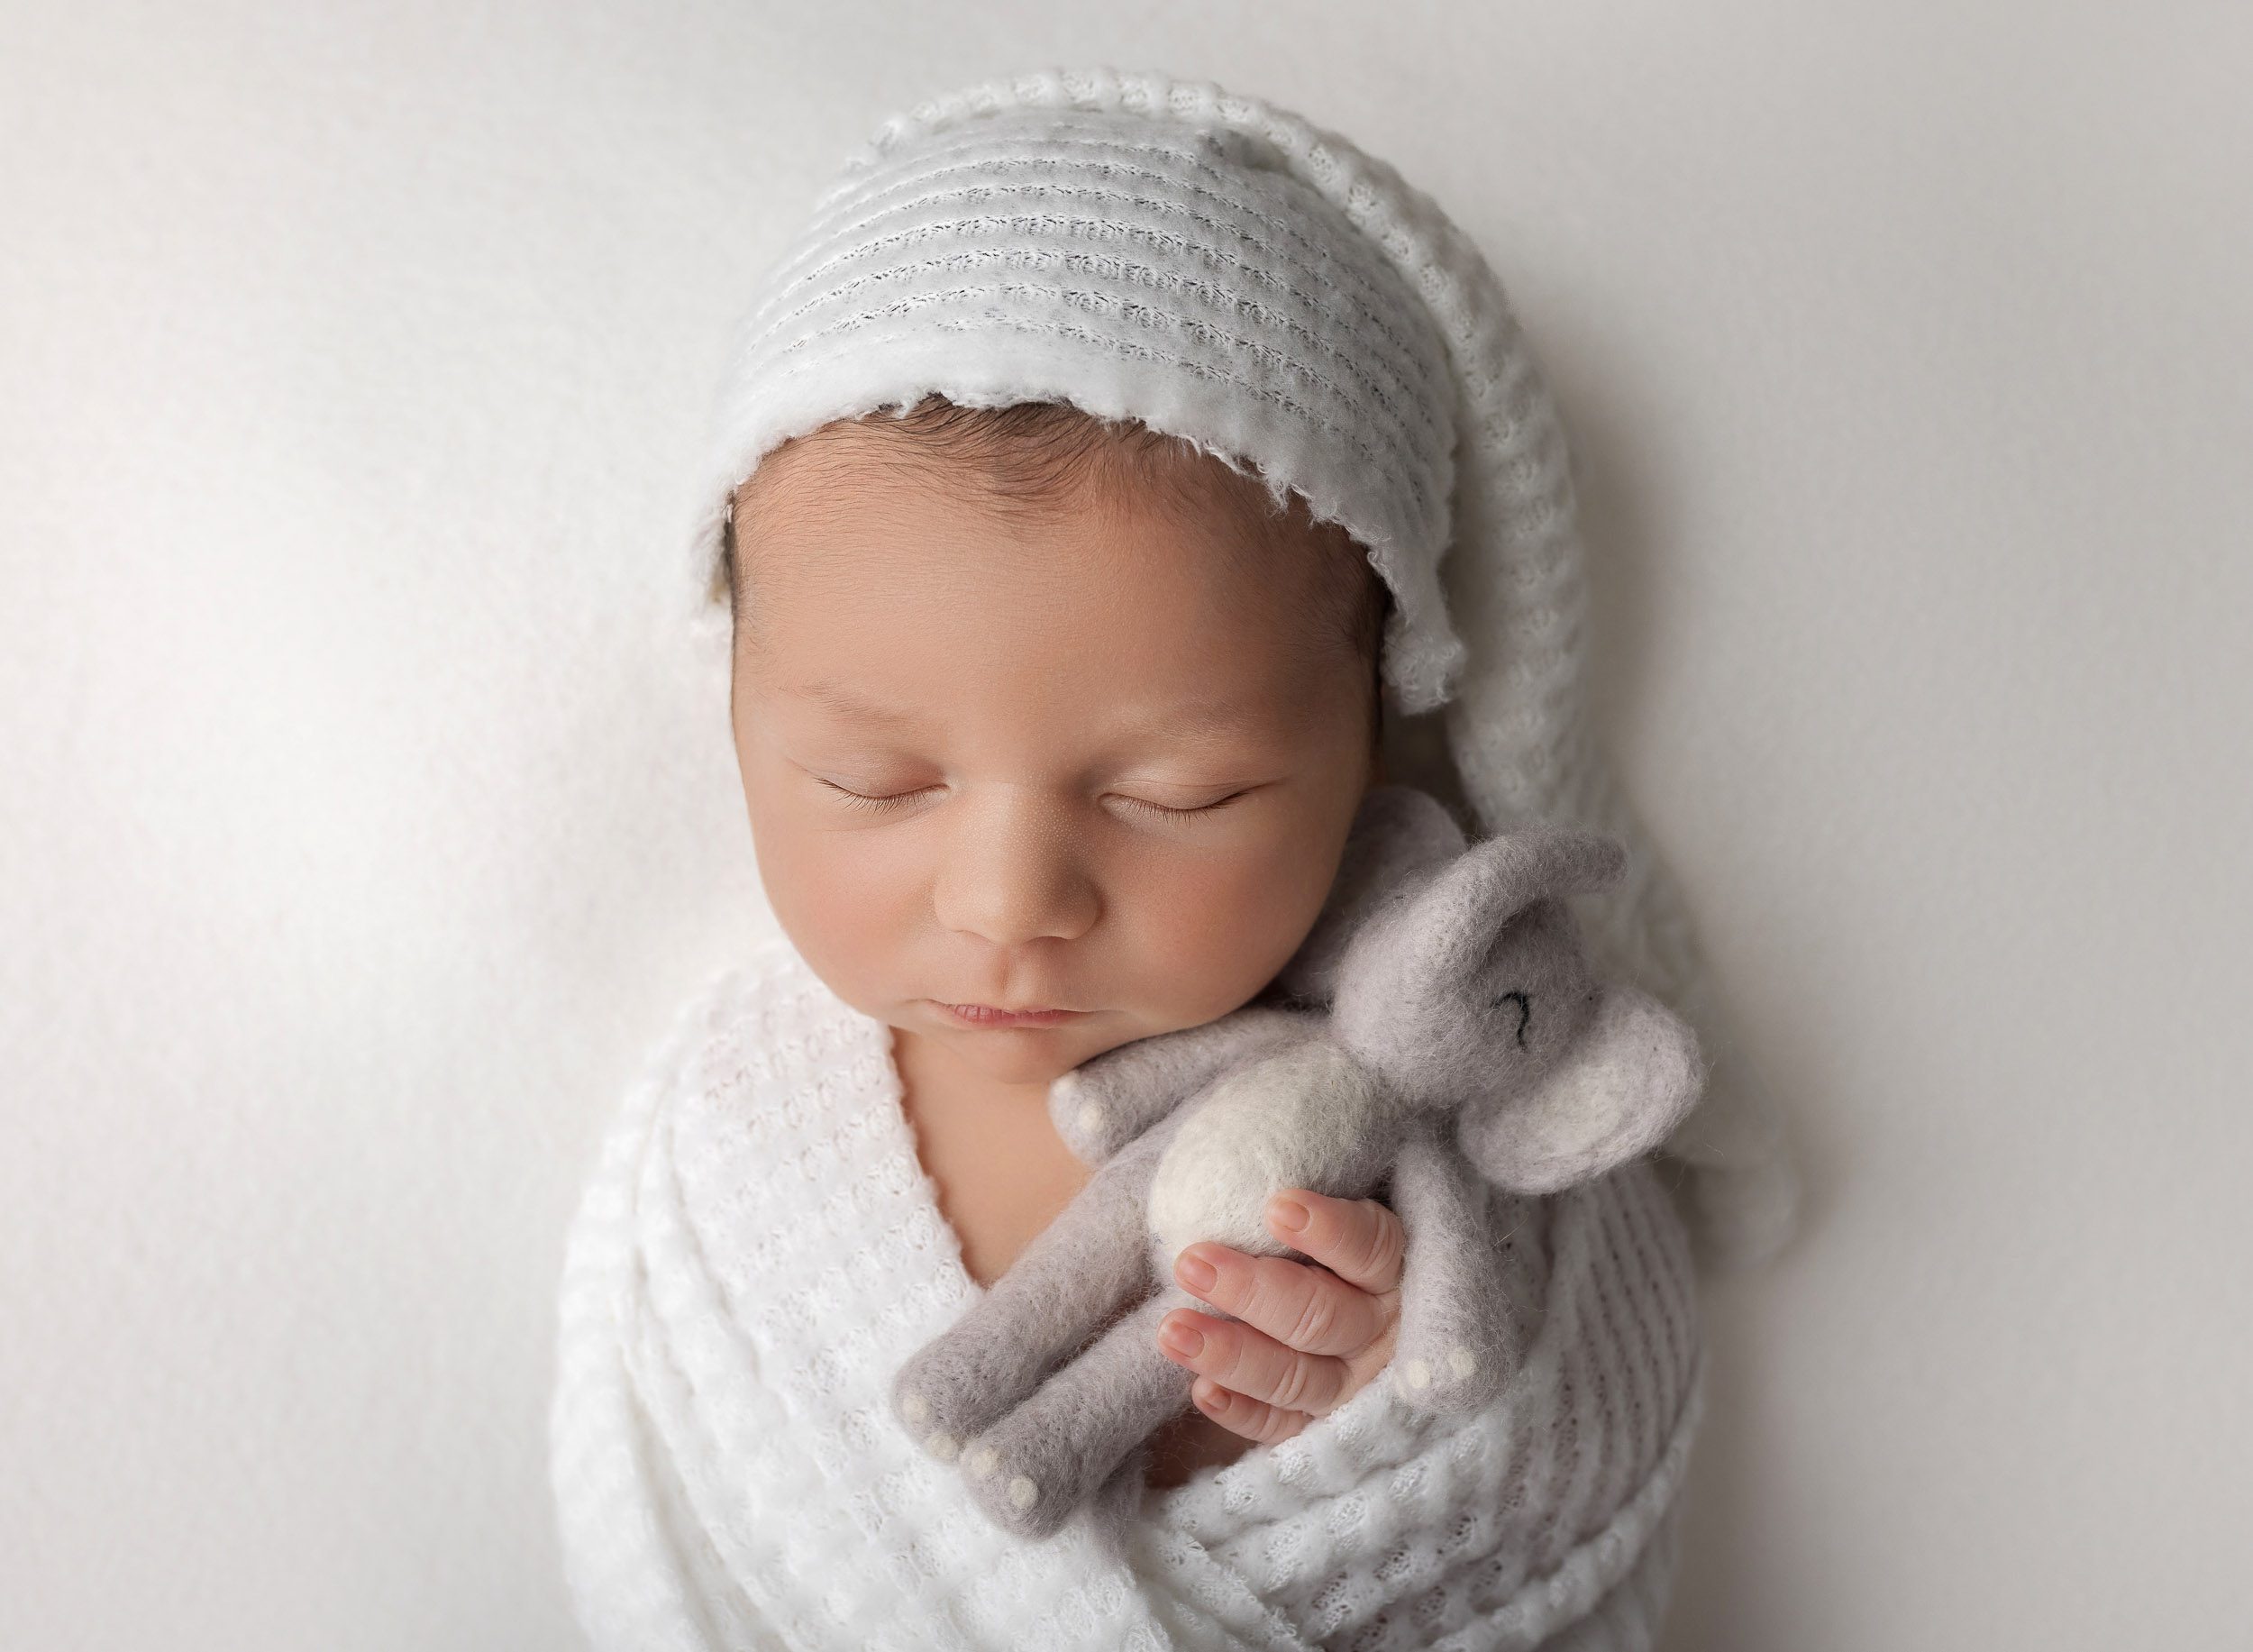 Newborn baby boy on white sleepy hat swaddled in matching whit fabric snuggling elepahant toy